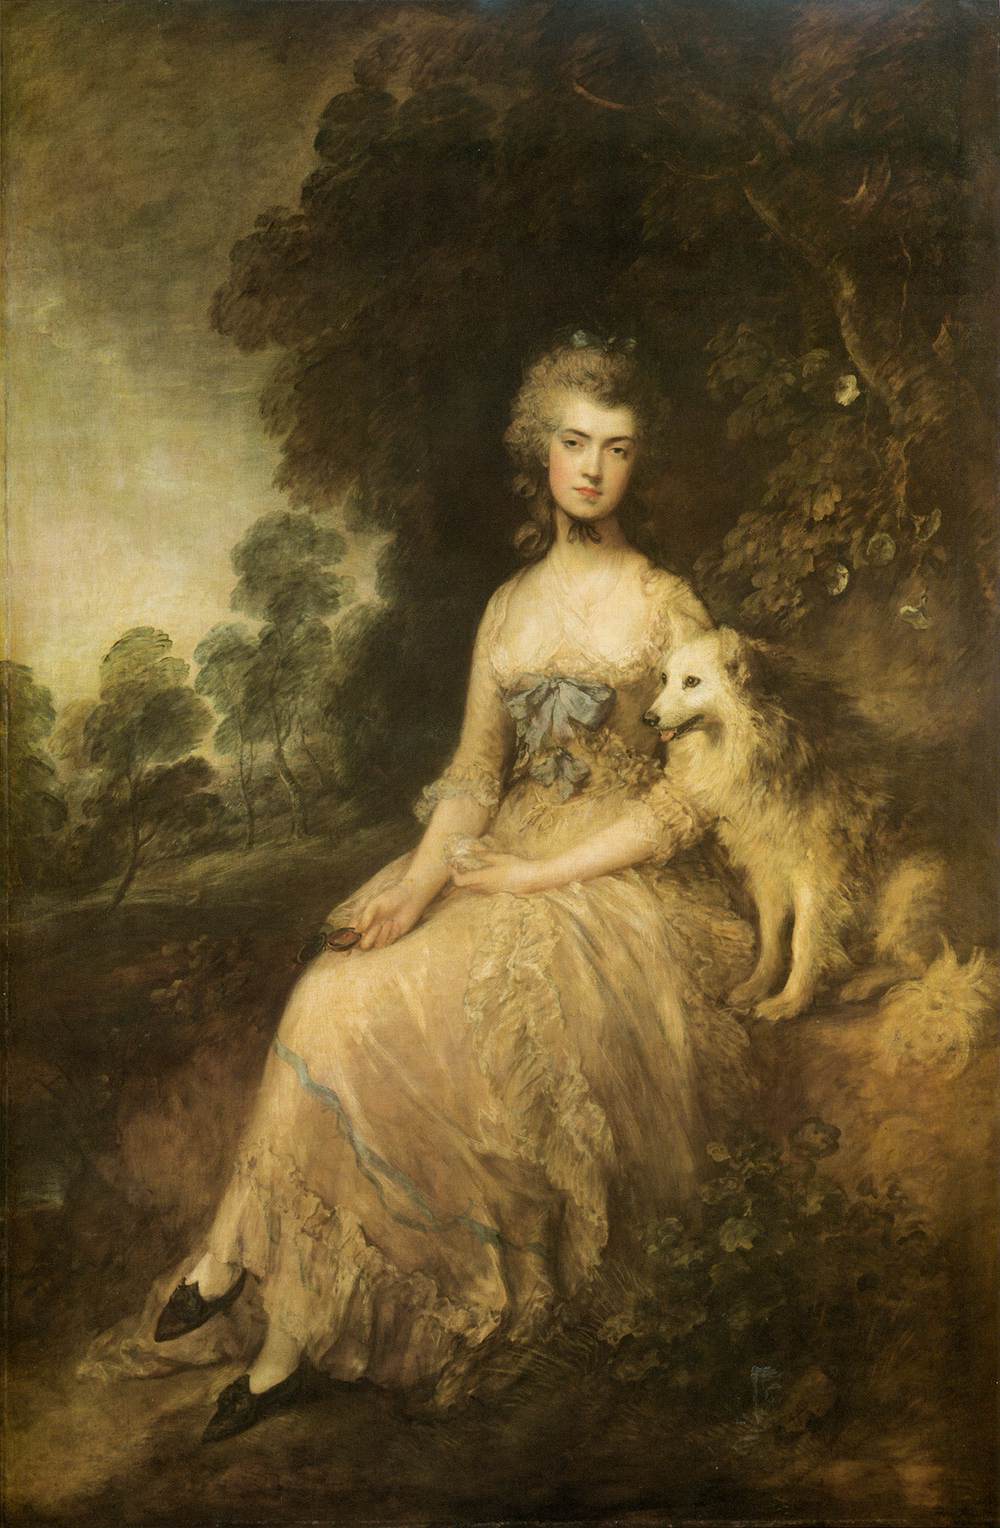 Thomas Gainsborough. Mrs. Mary Robinson, "Perdita", 1781